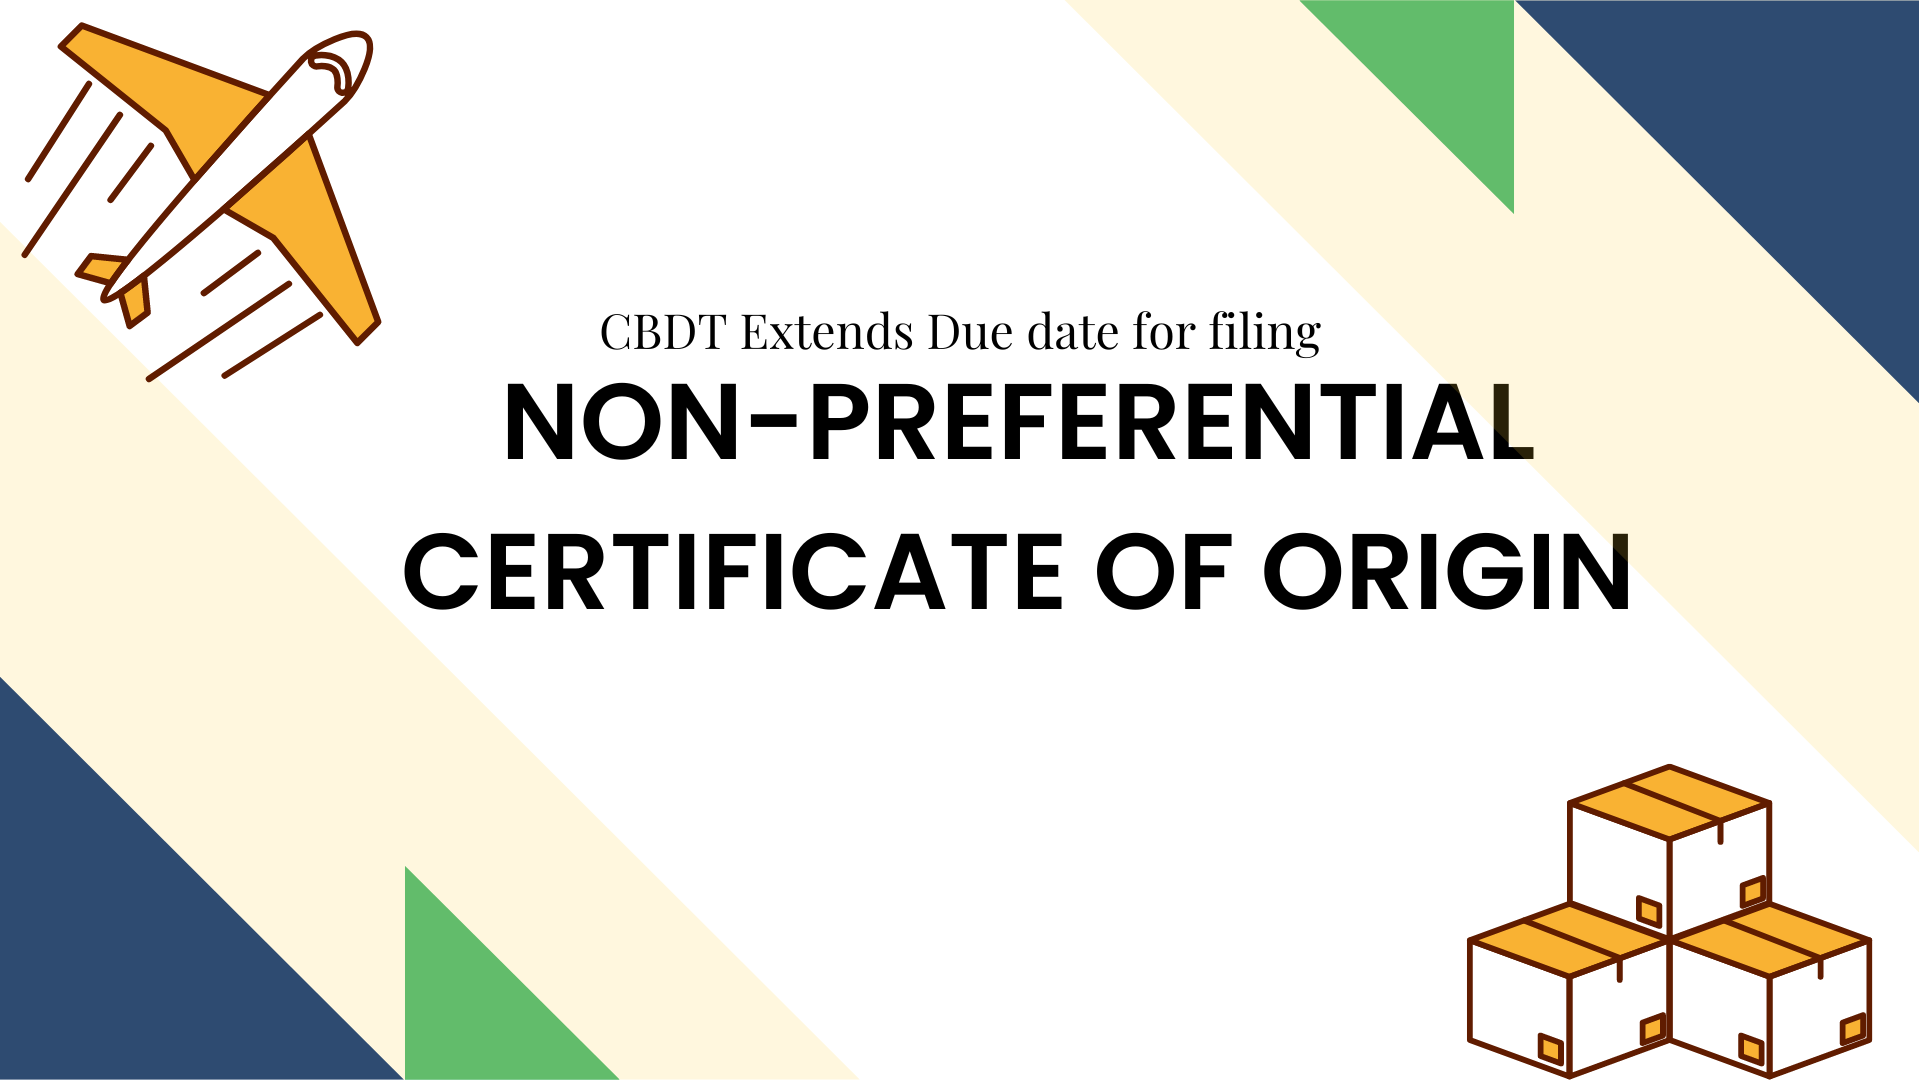 Filing of Non-Preferential Certificate of Origin